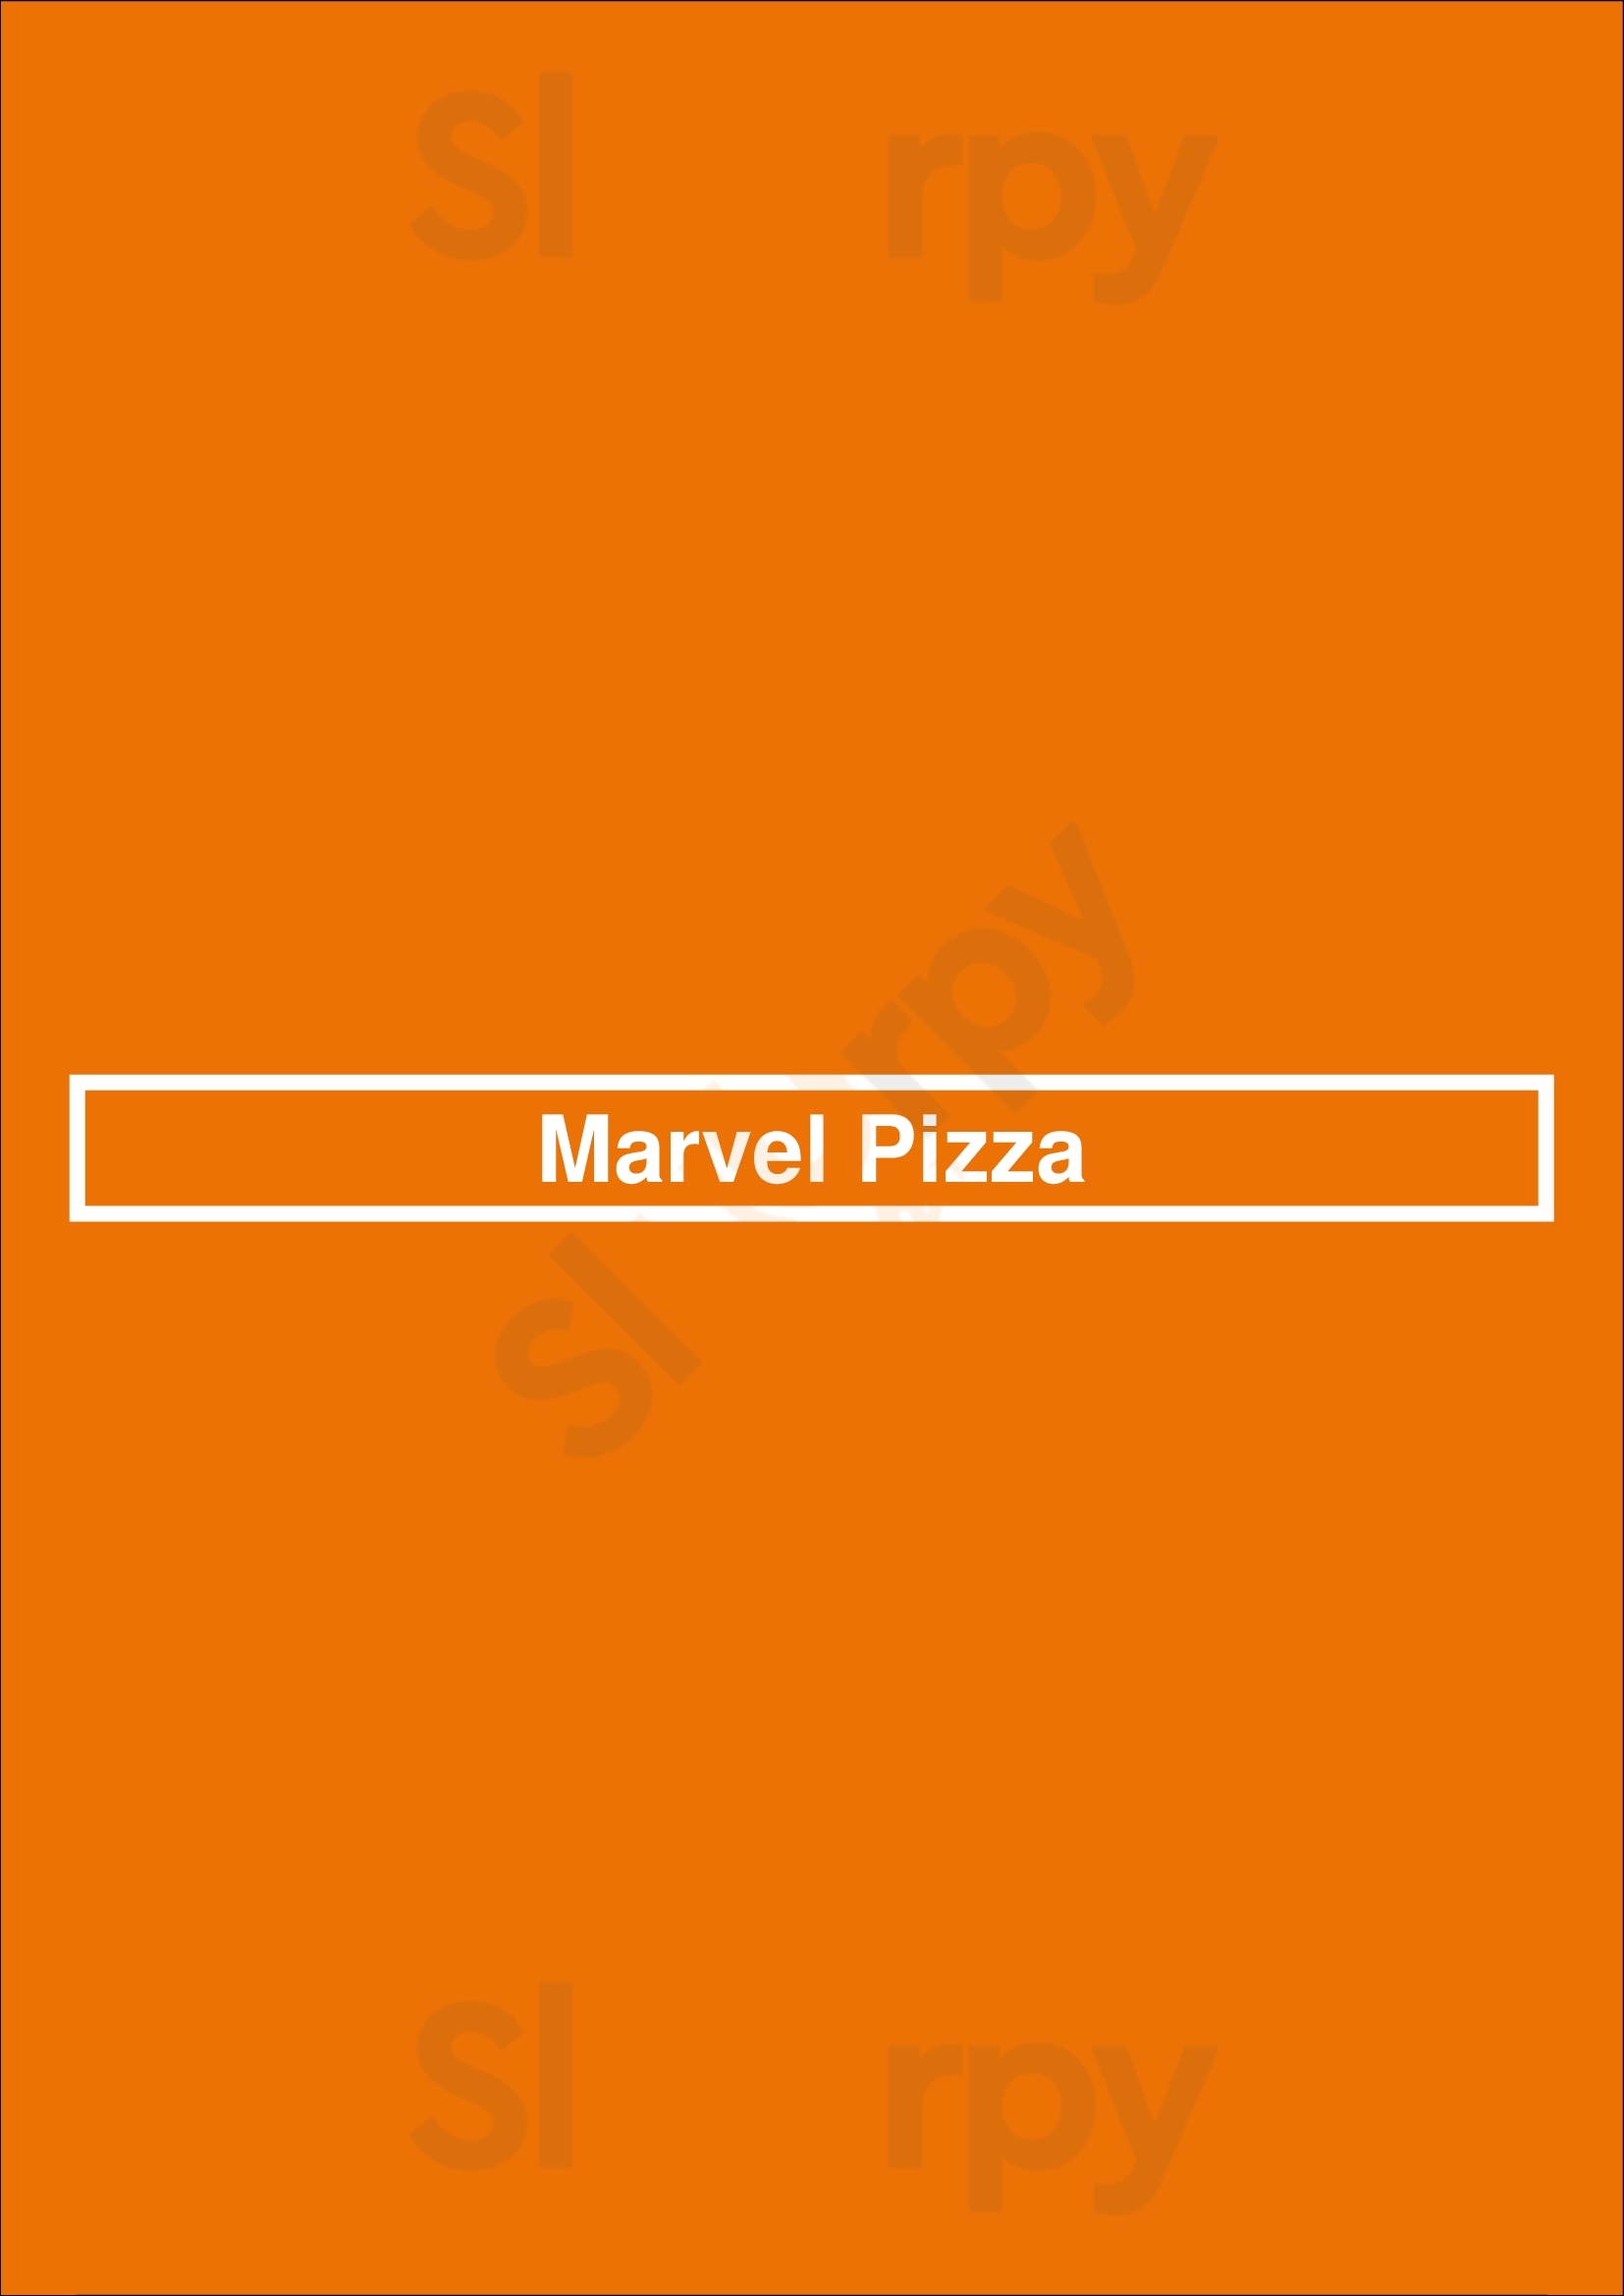 Marvel Pizza London Menu - 1